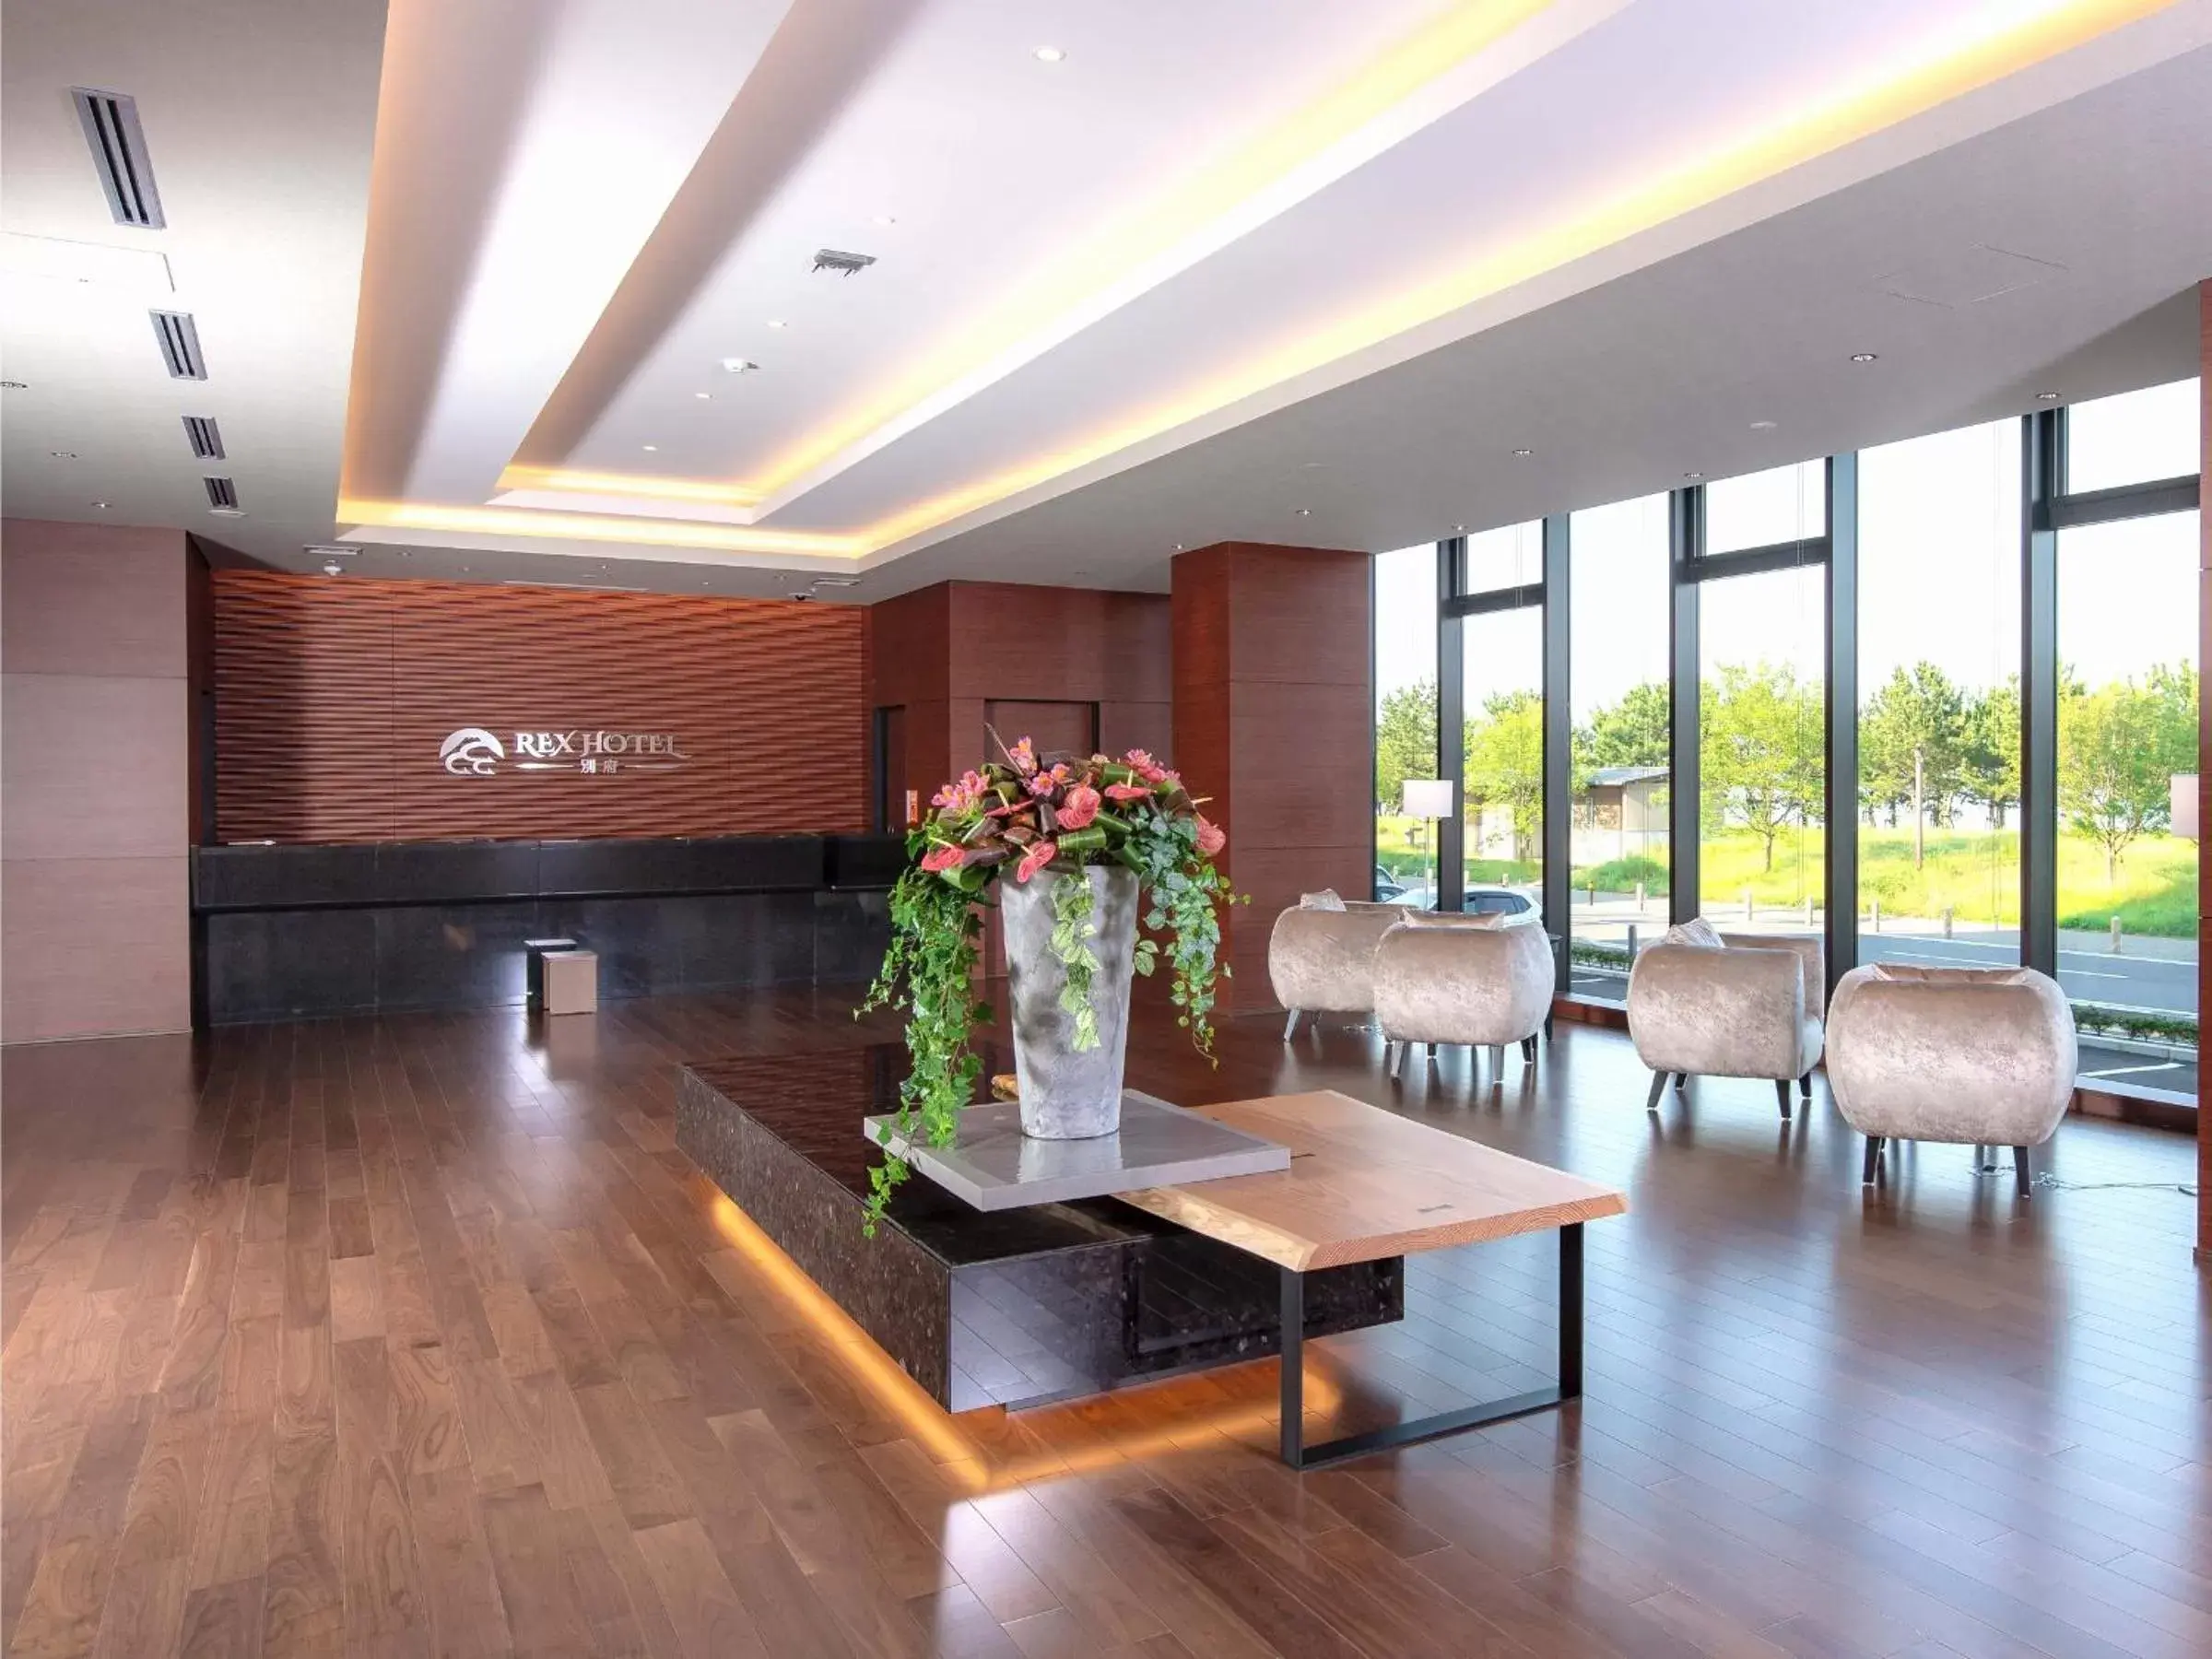 Lobby or reception in REX HOTEL Beppu